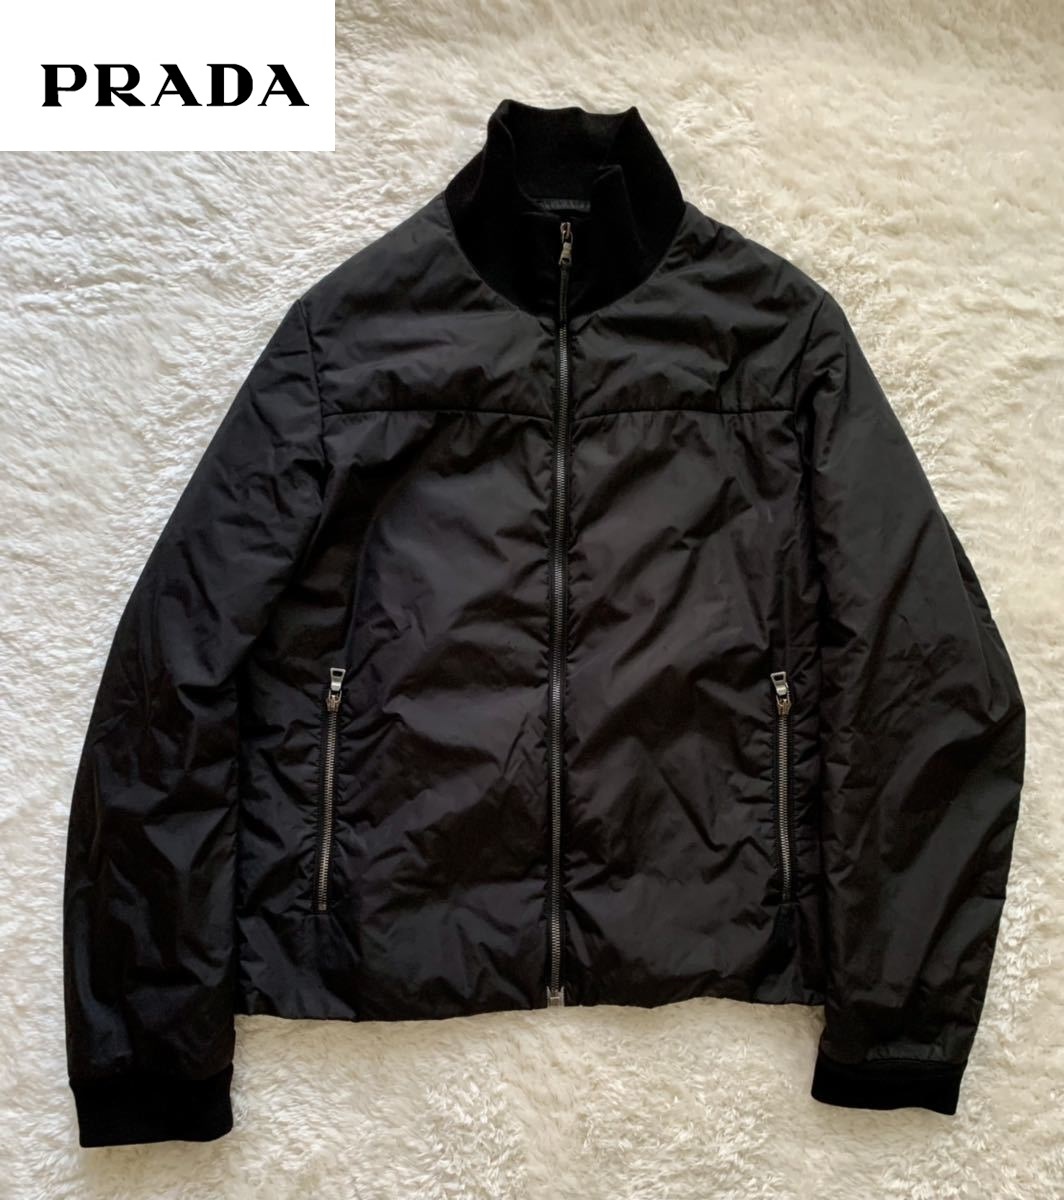 PRADA | 日本のオークション・通販ショッピングの代理入札・購入 